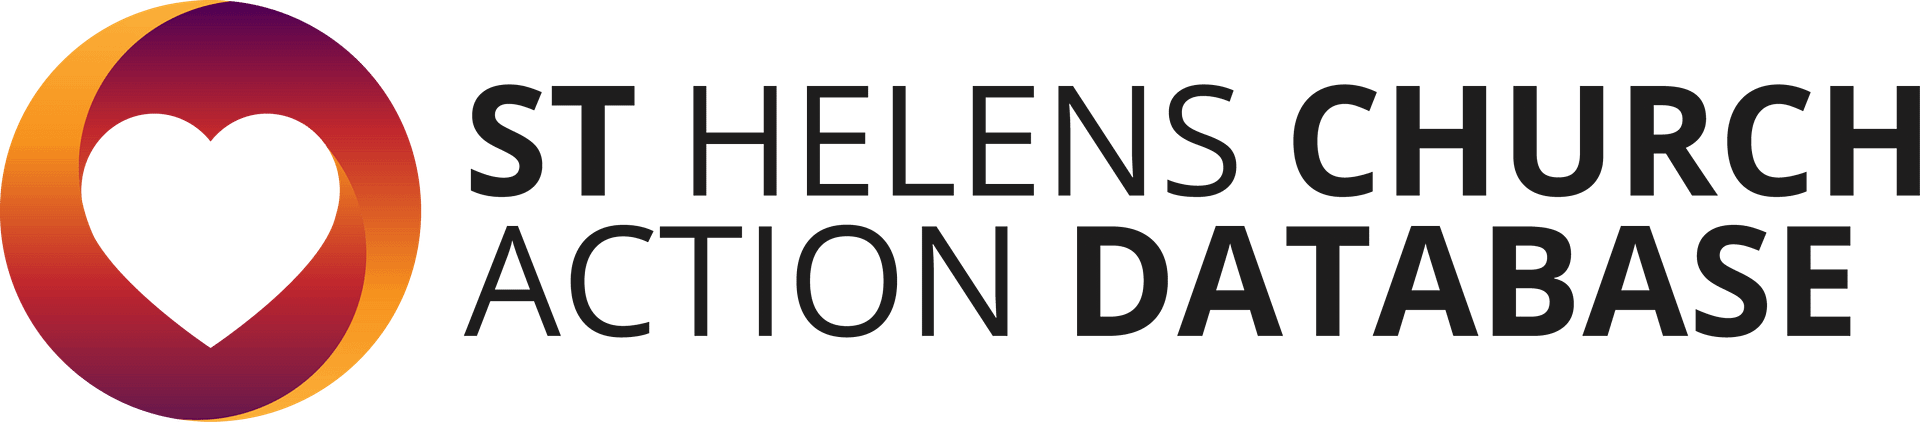 Church Action Database Logo